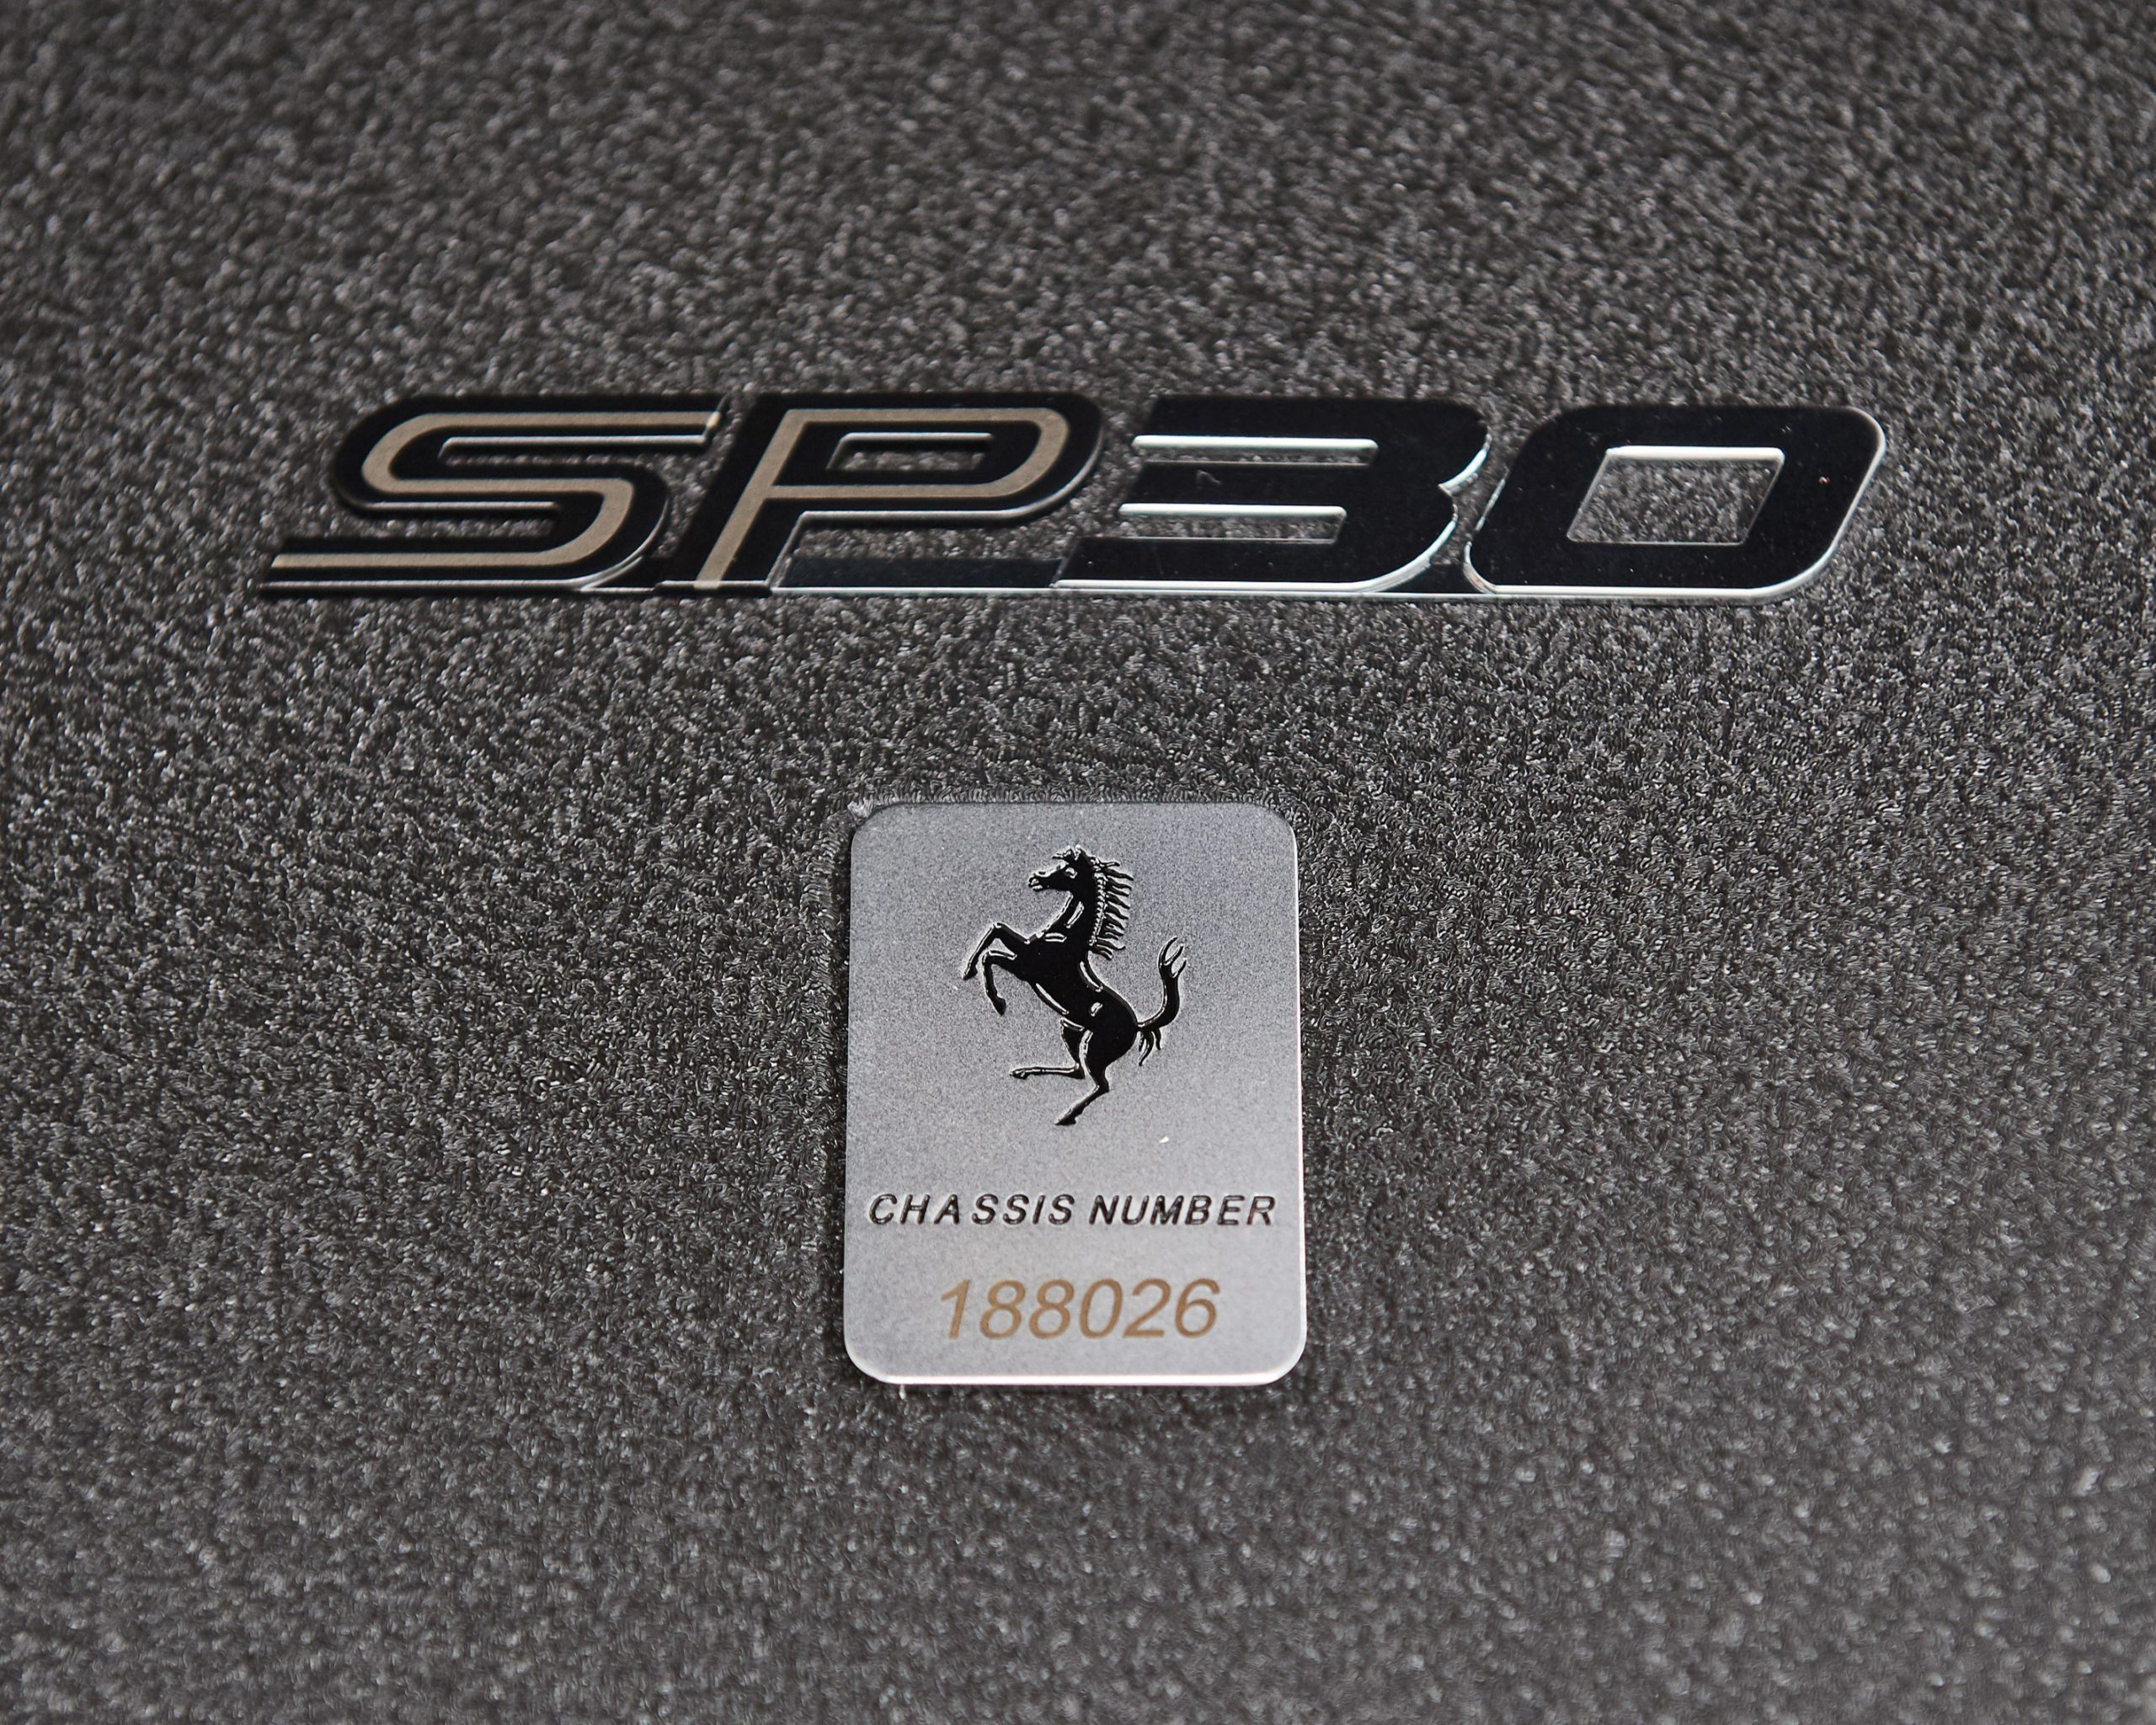 2011 Ferrari SP30 | Sami Sasso ©2018 Courtesy of RM Sotheby's